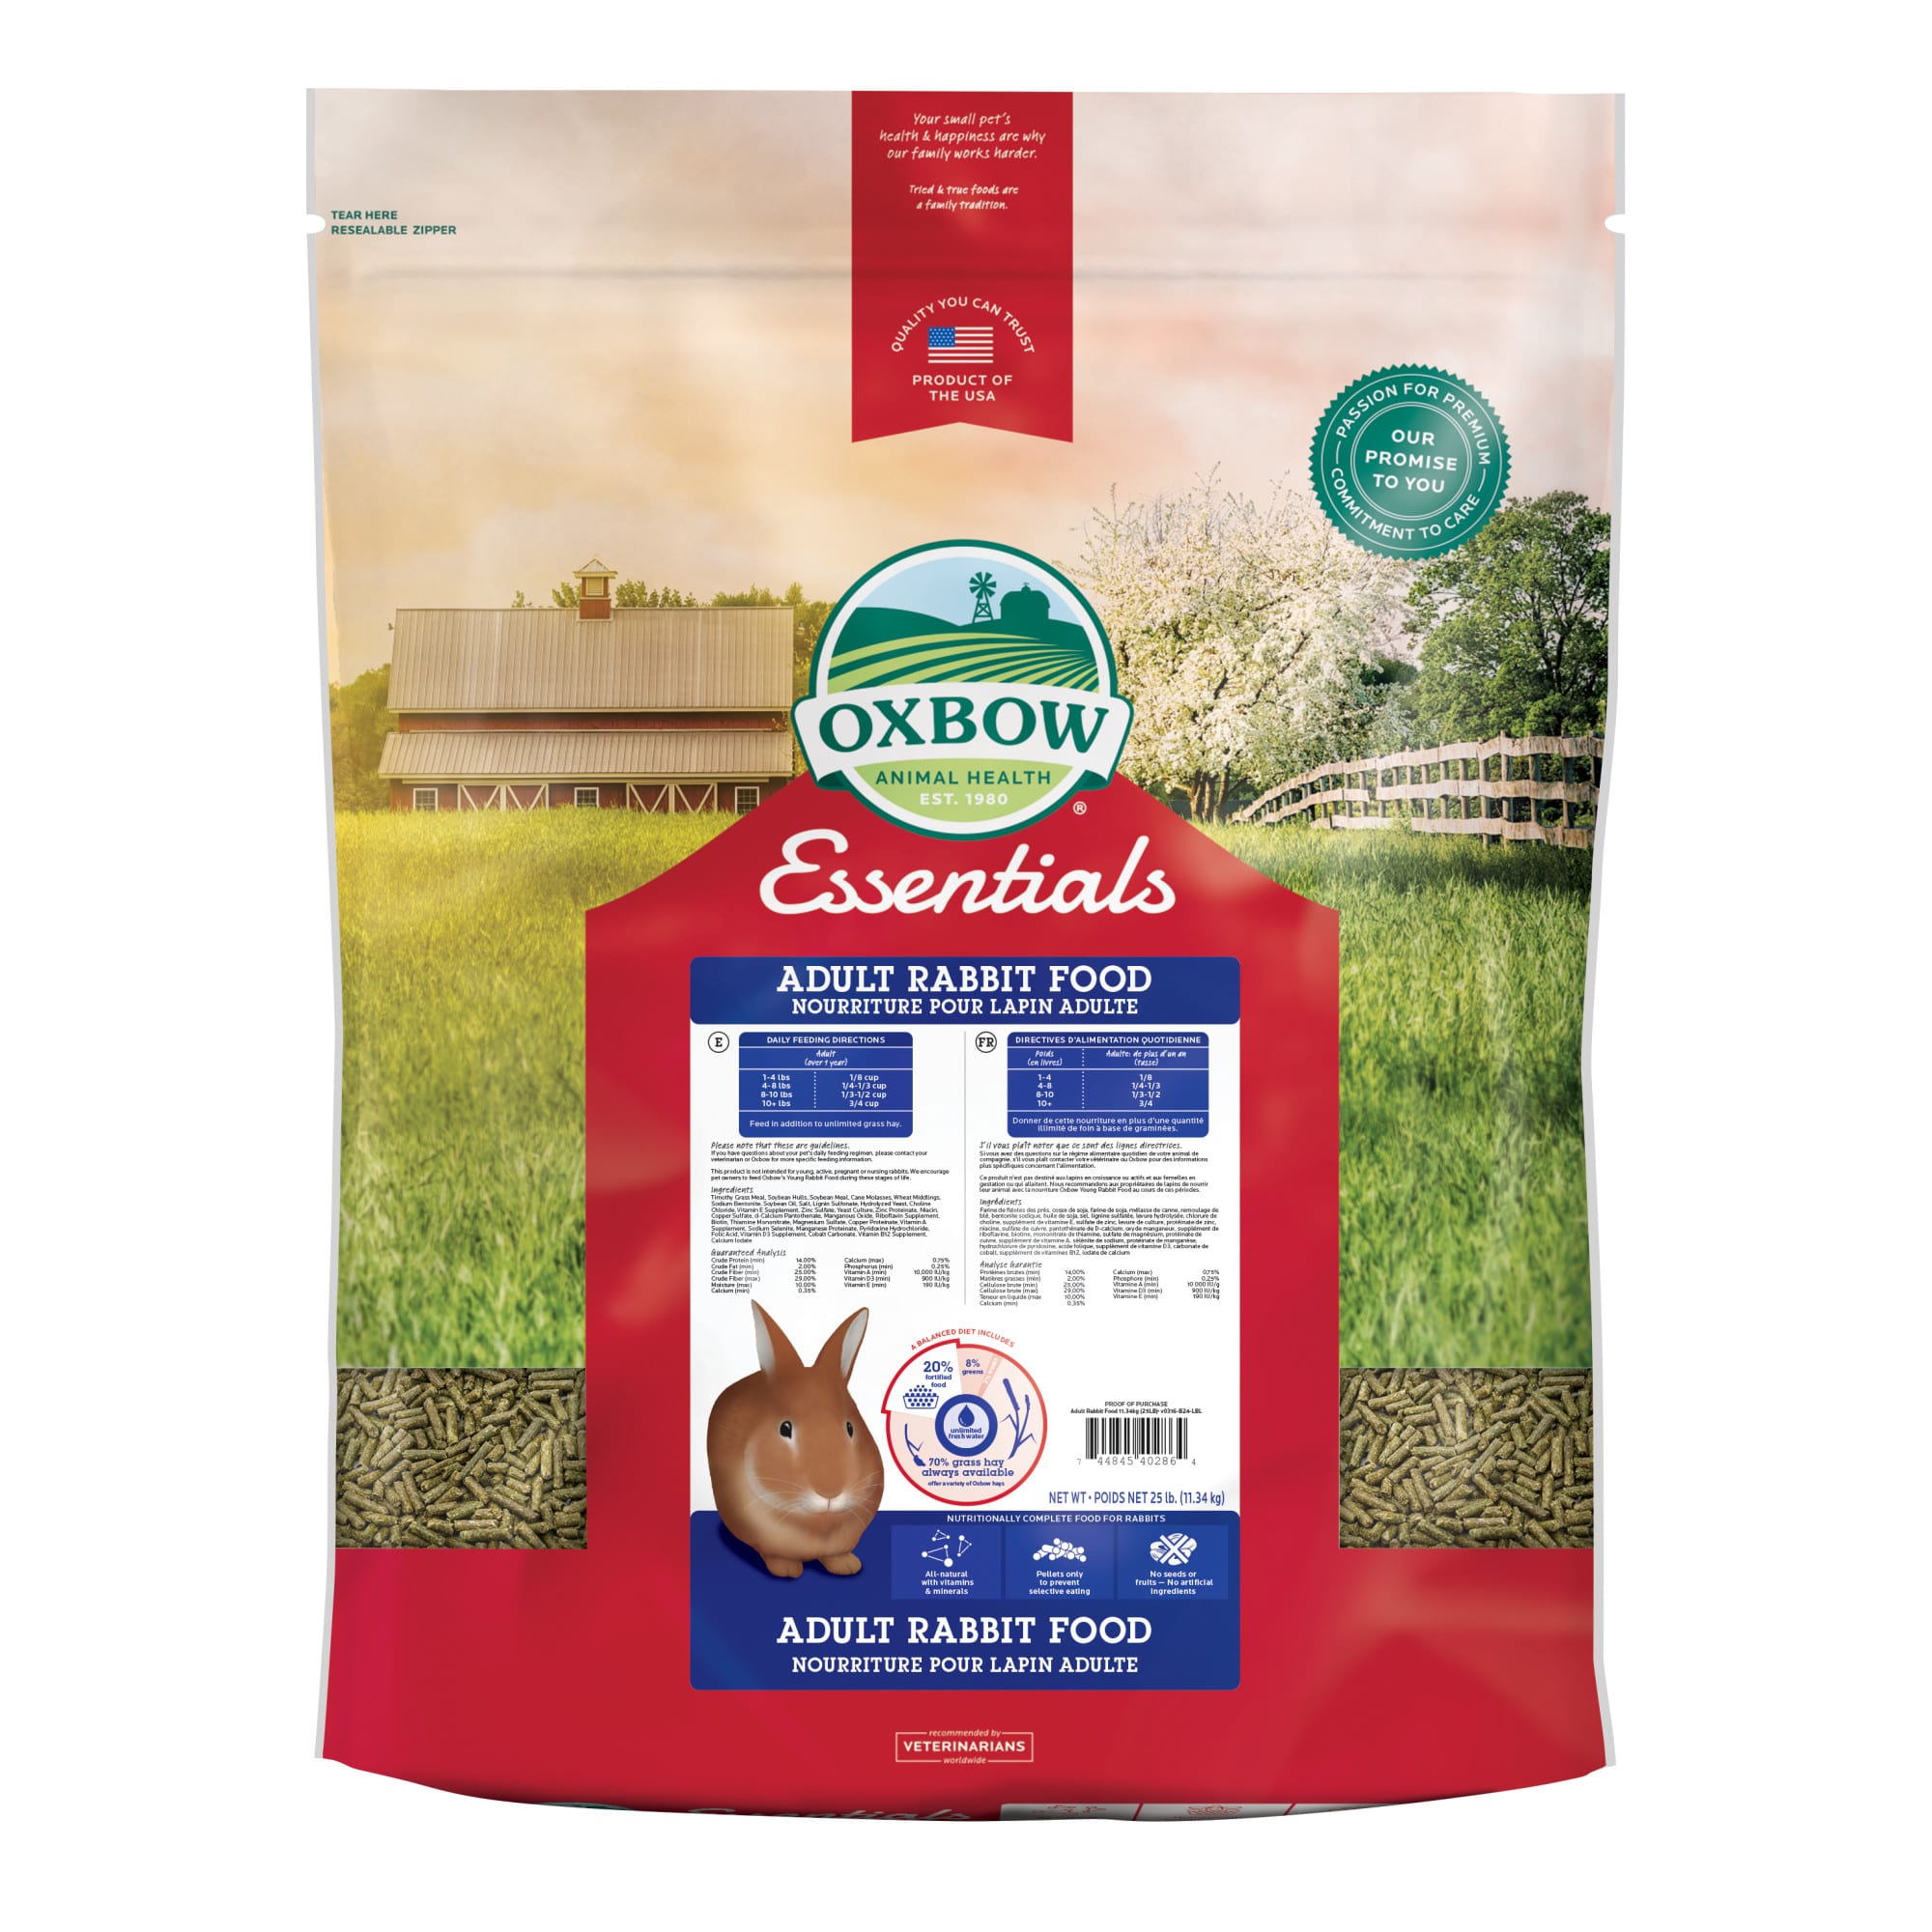 Oxbow Essentials Adult Rabbit Food, 25 lbs. Petco